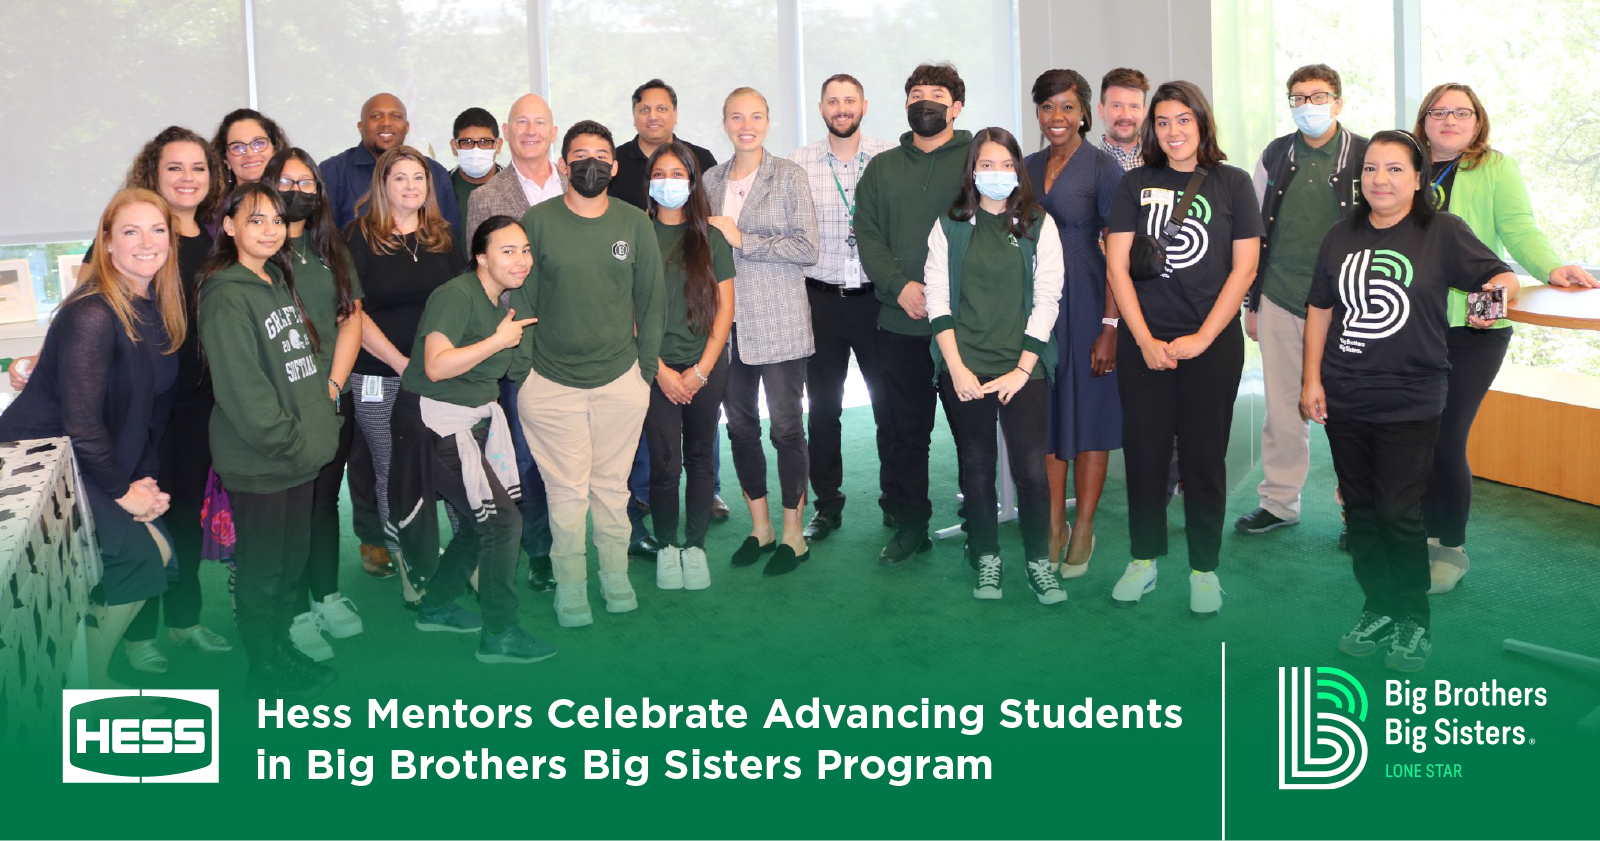 Hess Mentors Celebrate Advancing Students in Big Brothers Big Sisters Program